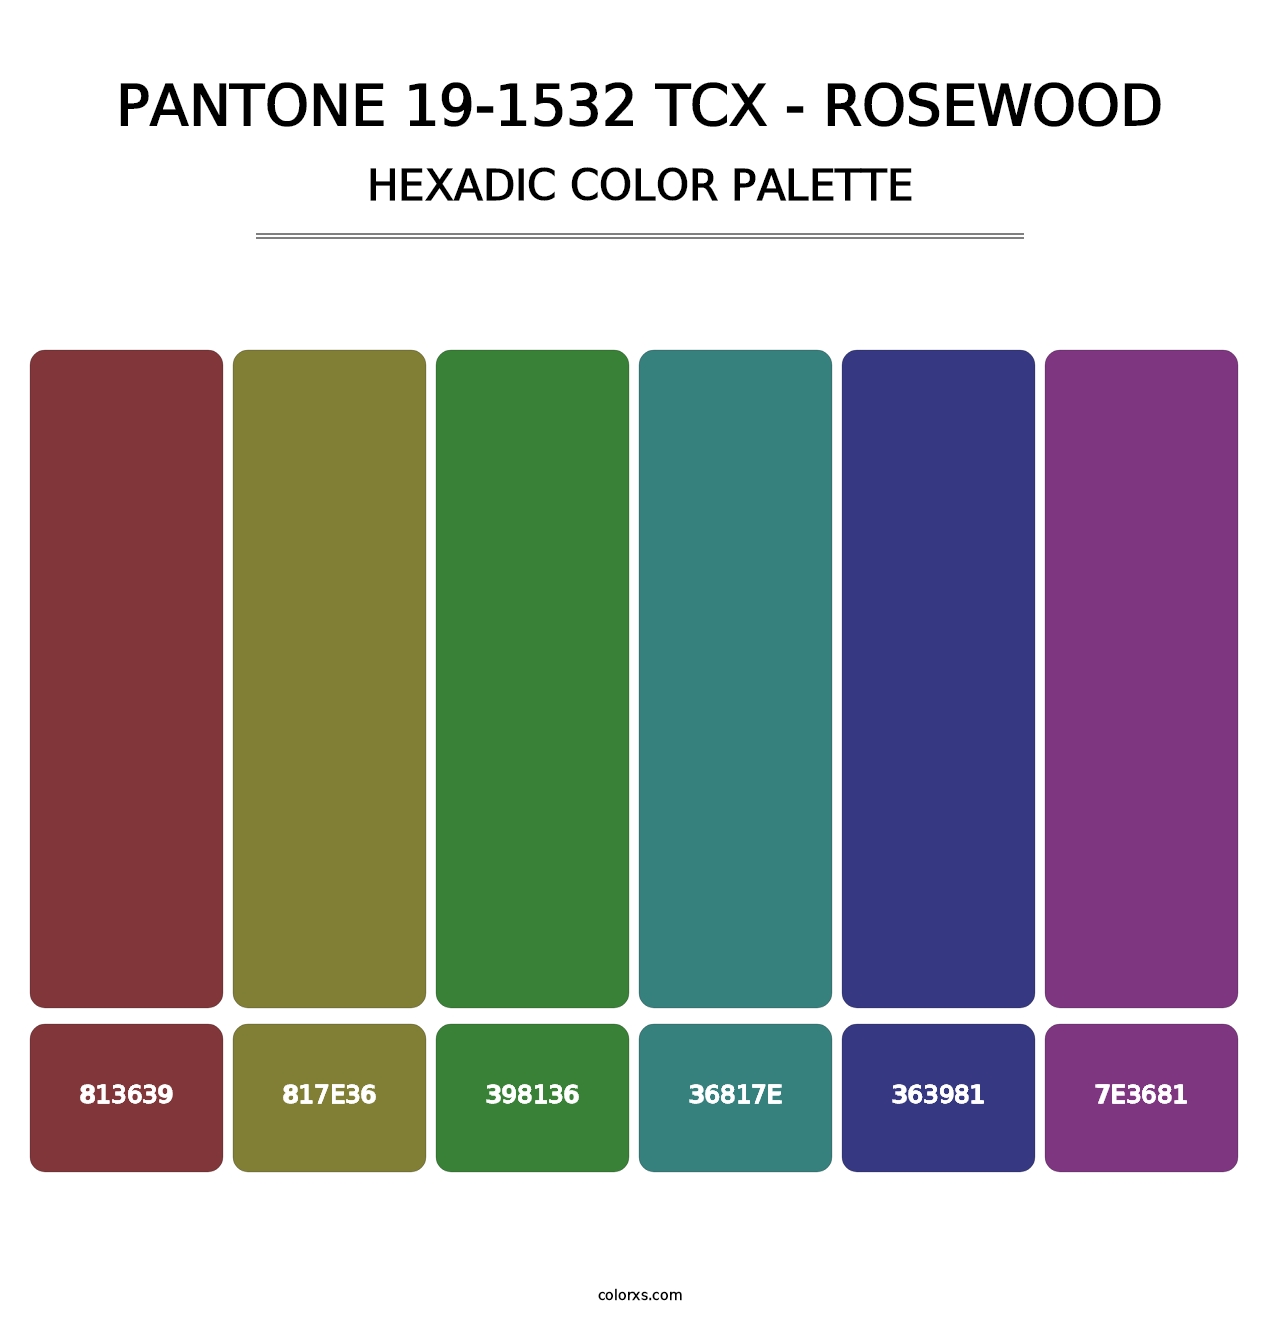 PANTONE 19-1532 TCX - Rosewood - Hexadic Color Palette